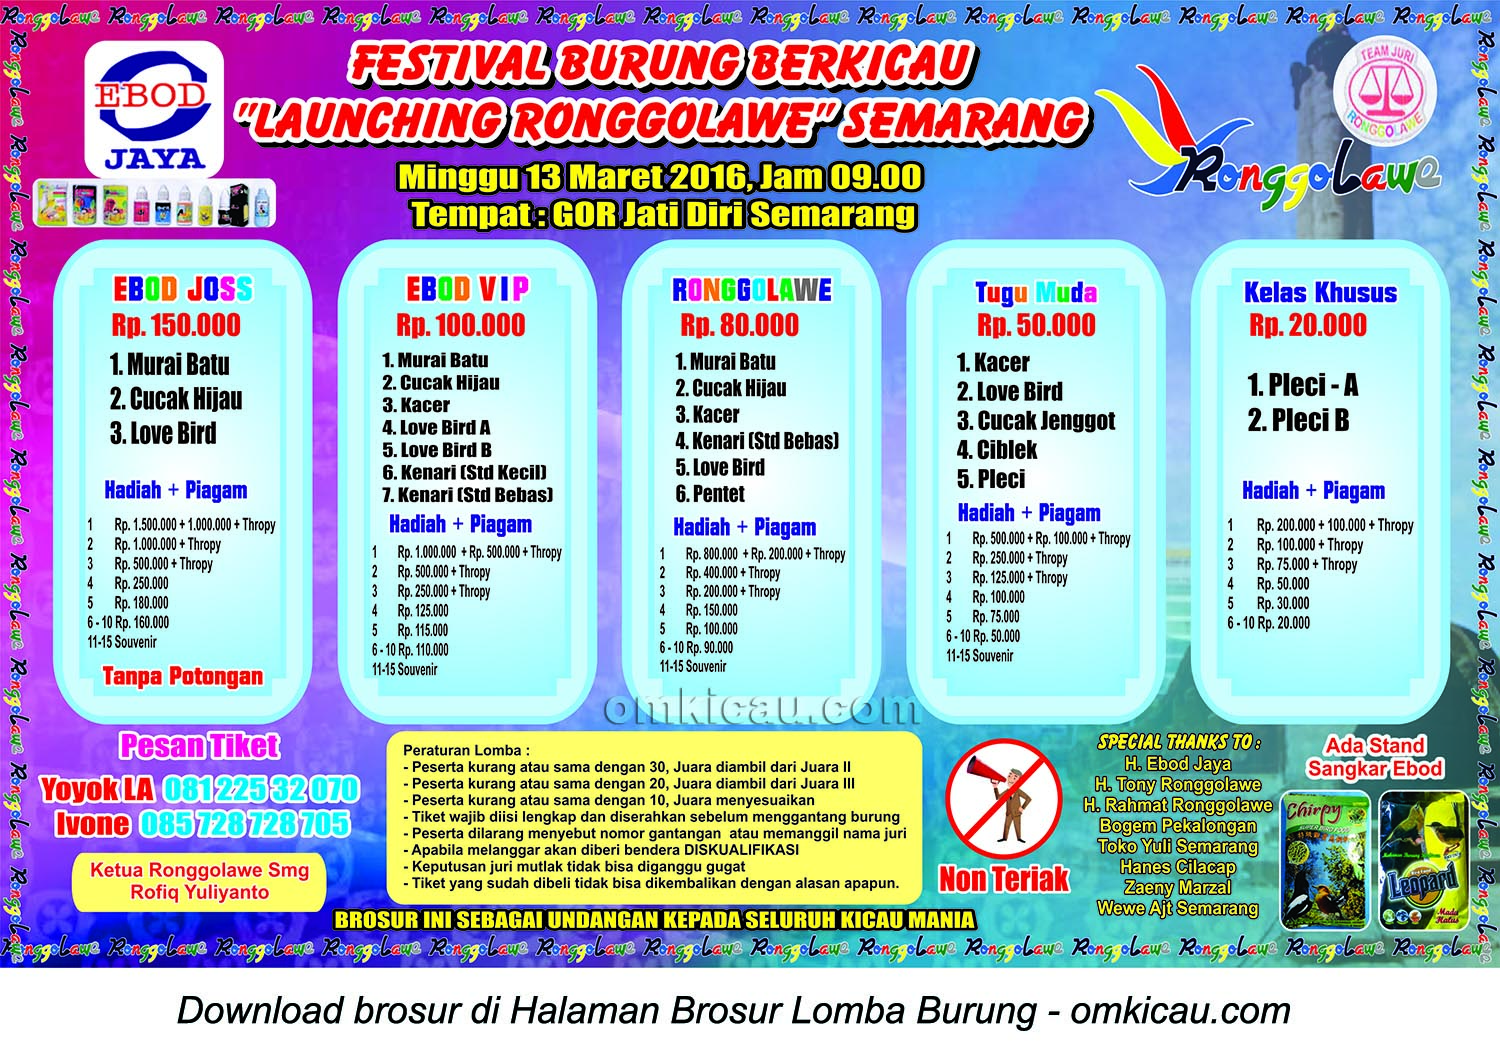 Brosur Festival Burung Berkicau Launching Ronggolawe Semarang, 13 Maret 2016